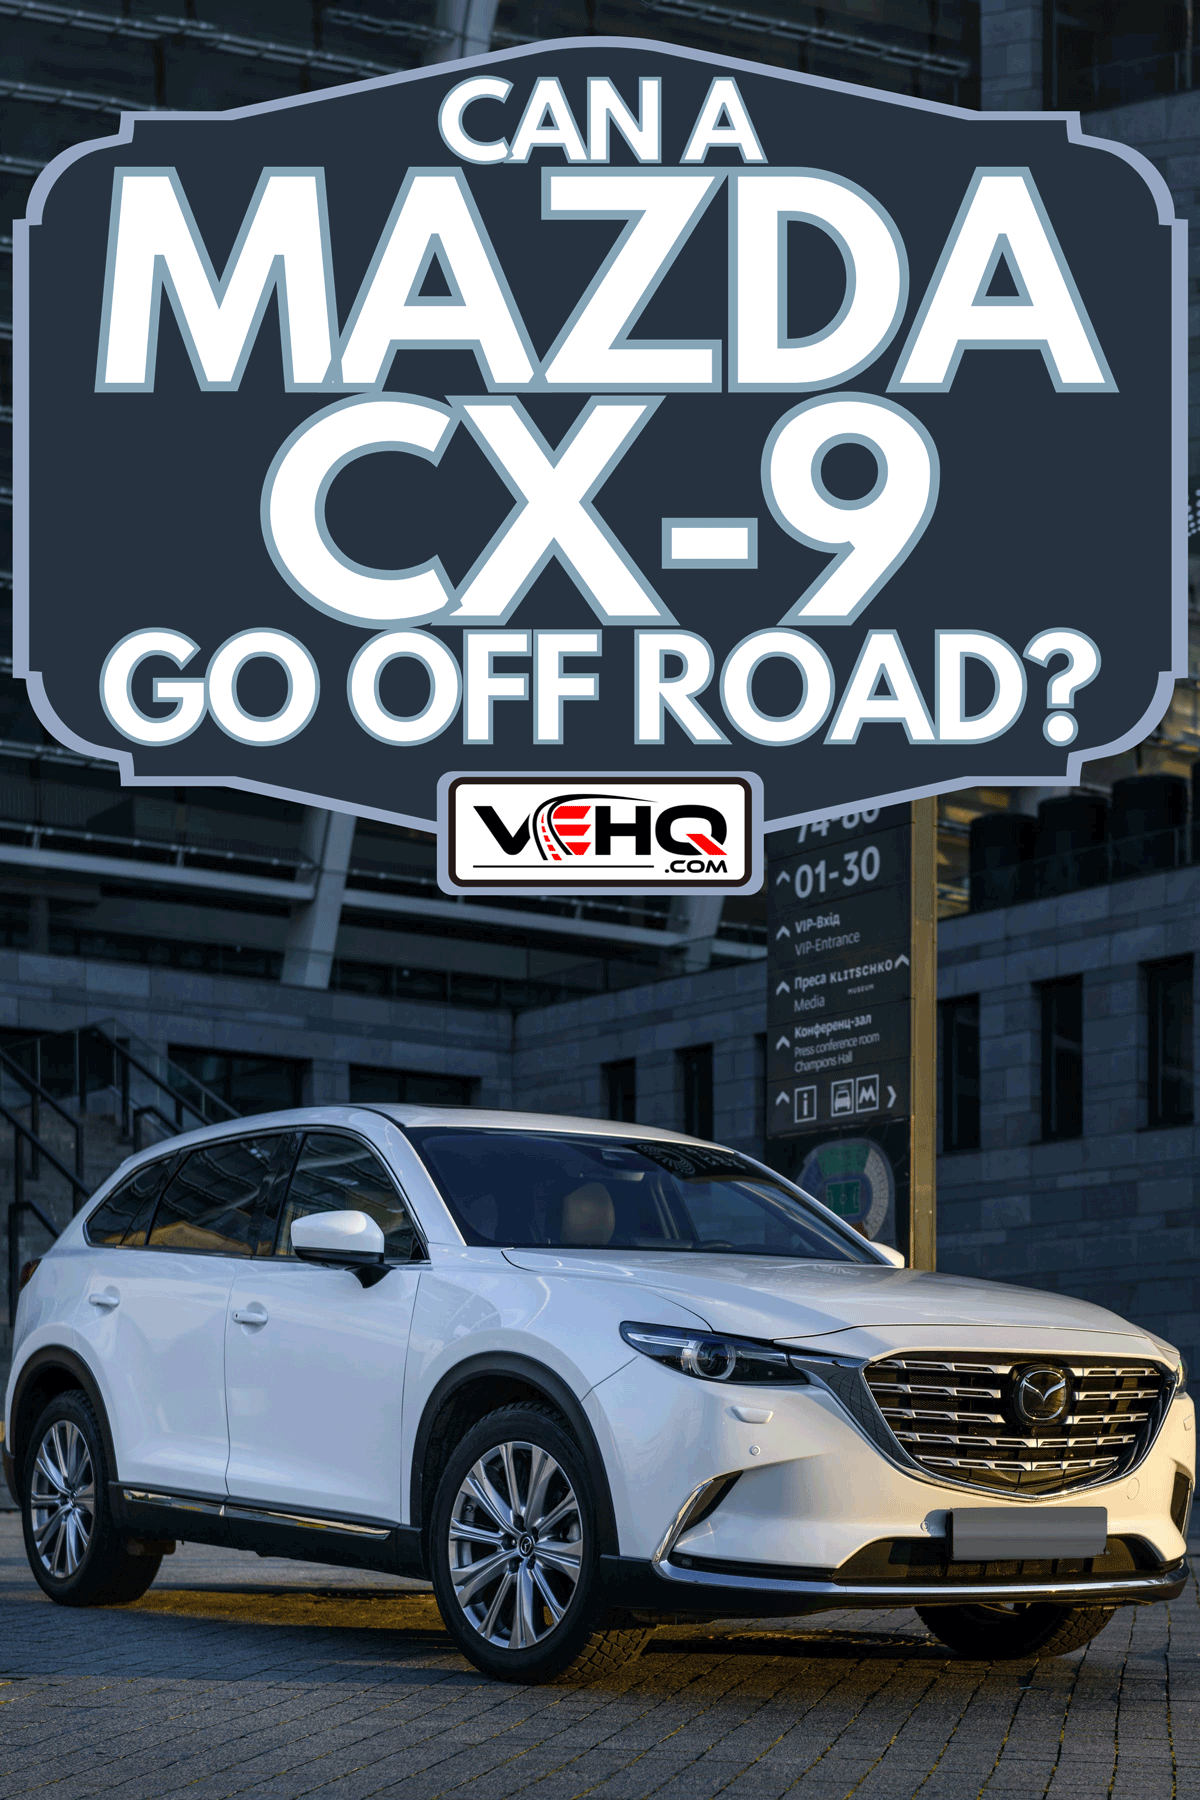 Mazda CX-9 near national sports complex, Can A Mazda CX-9 Go Off Road?